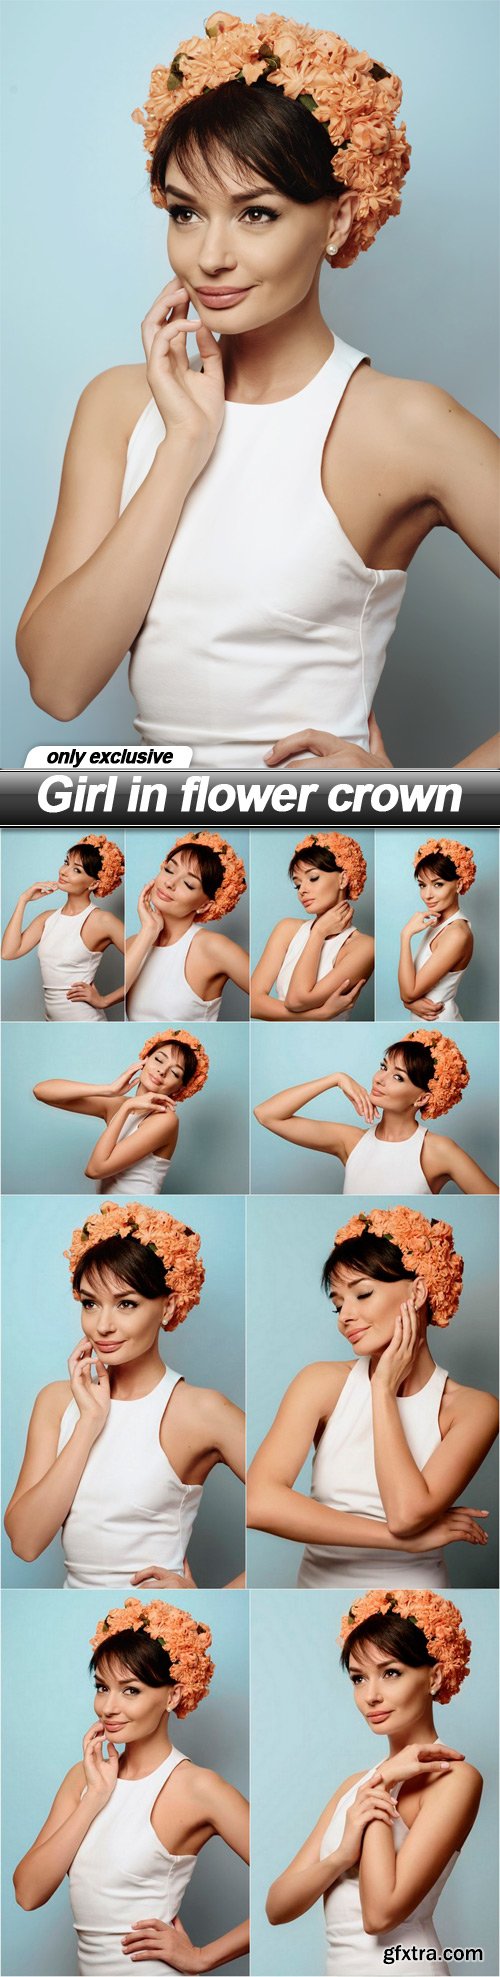 Girl in flower crown - 10 UHQ JPEG